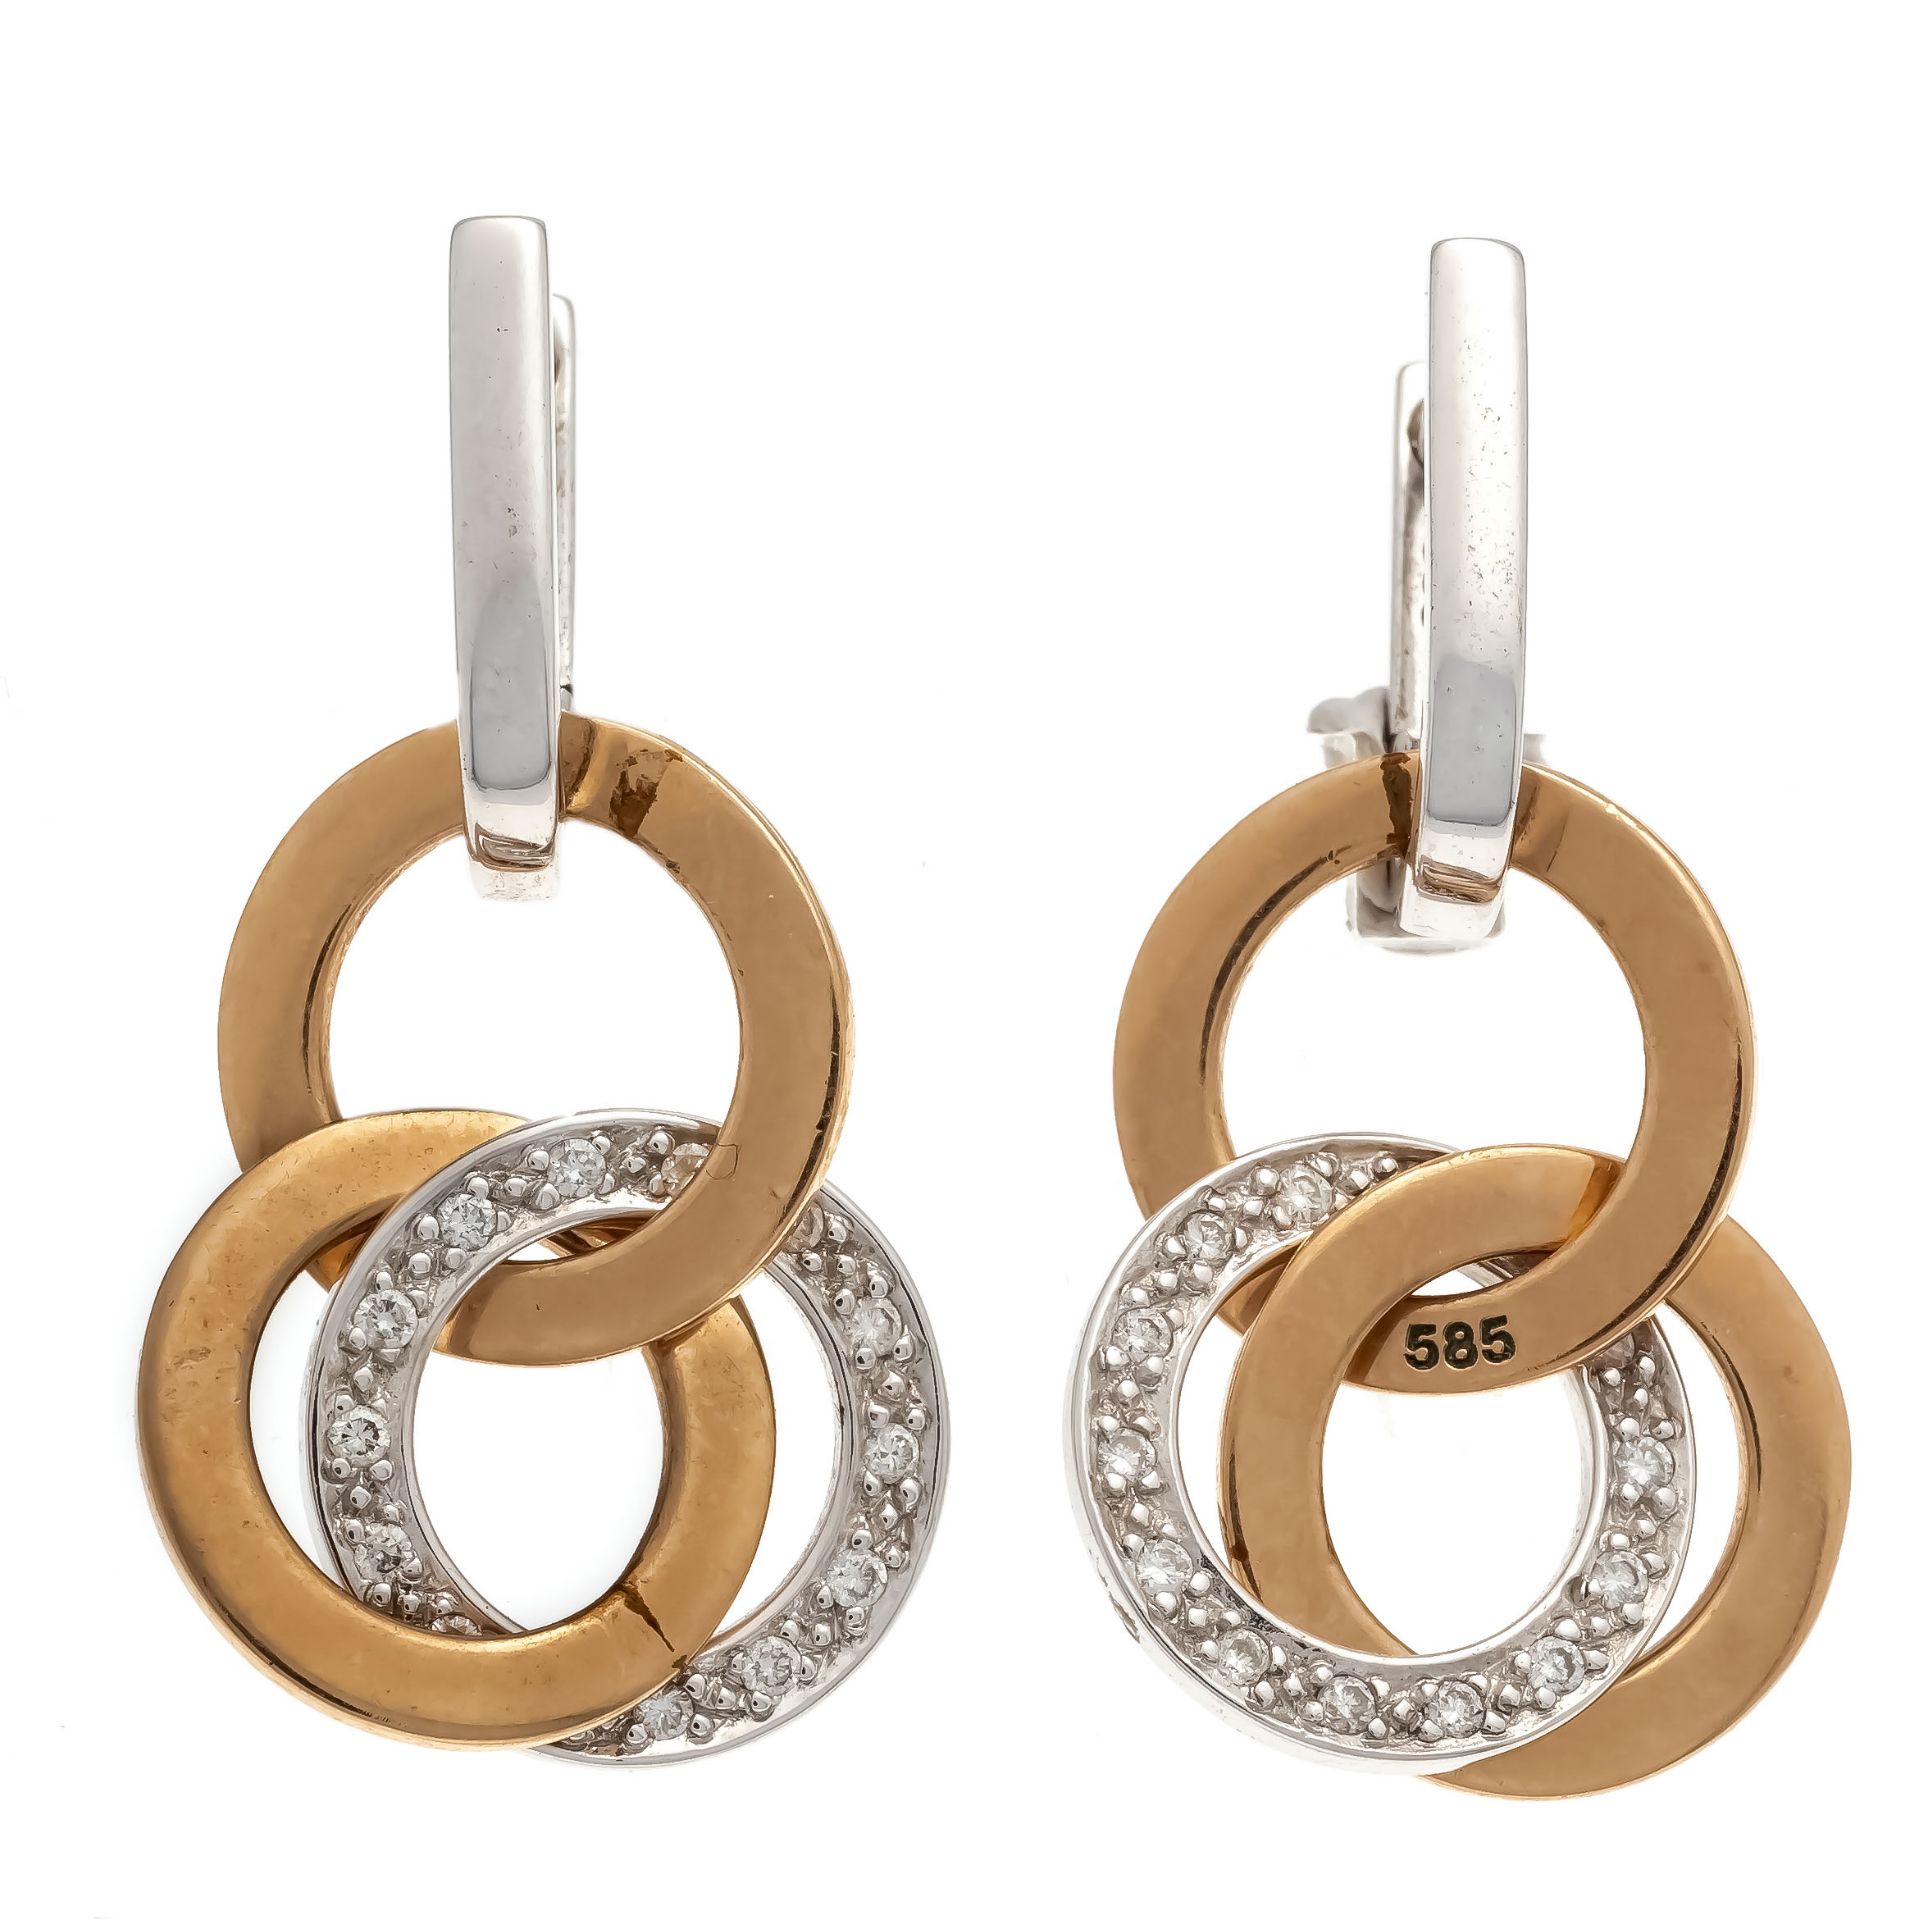 Brilliant clip earrings GG/RG/WG 585/000 with 28 brilliant-cut diamonds, total 0.14 ct W/SI, l. 29.5